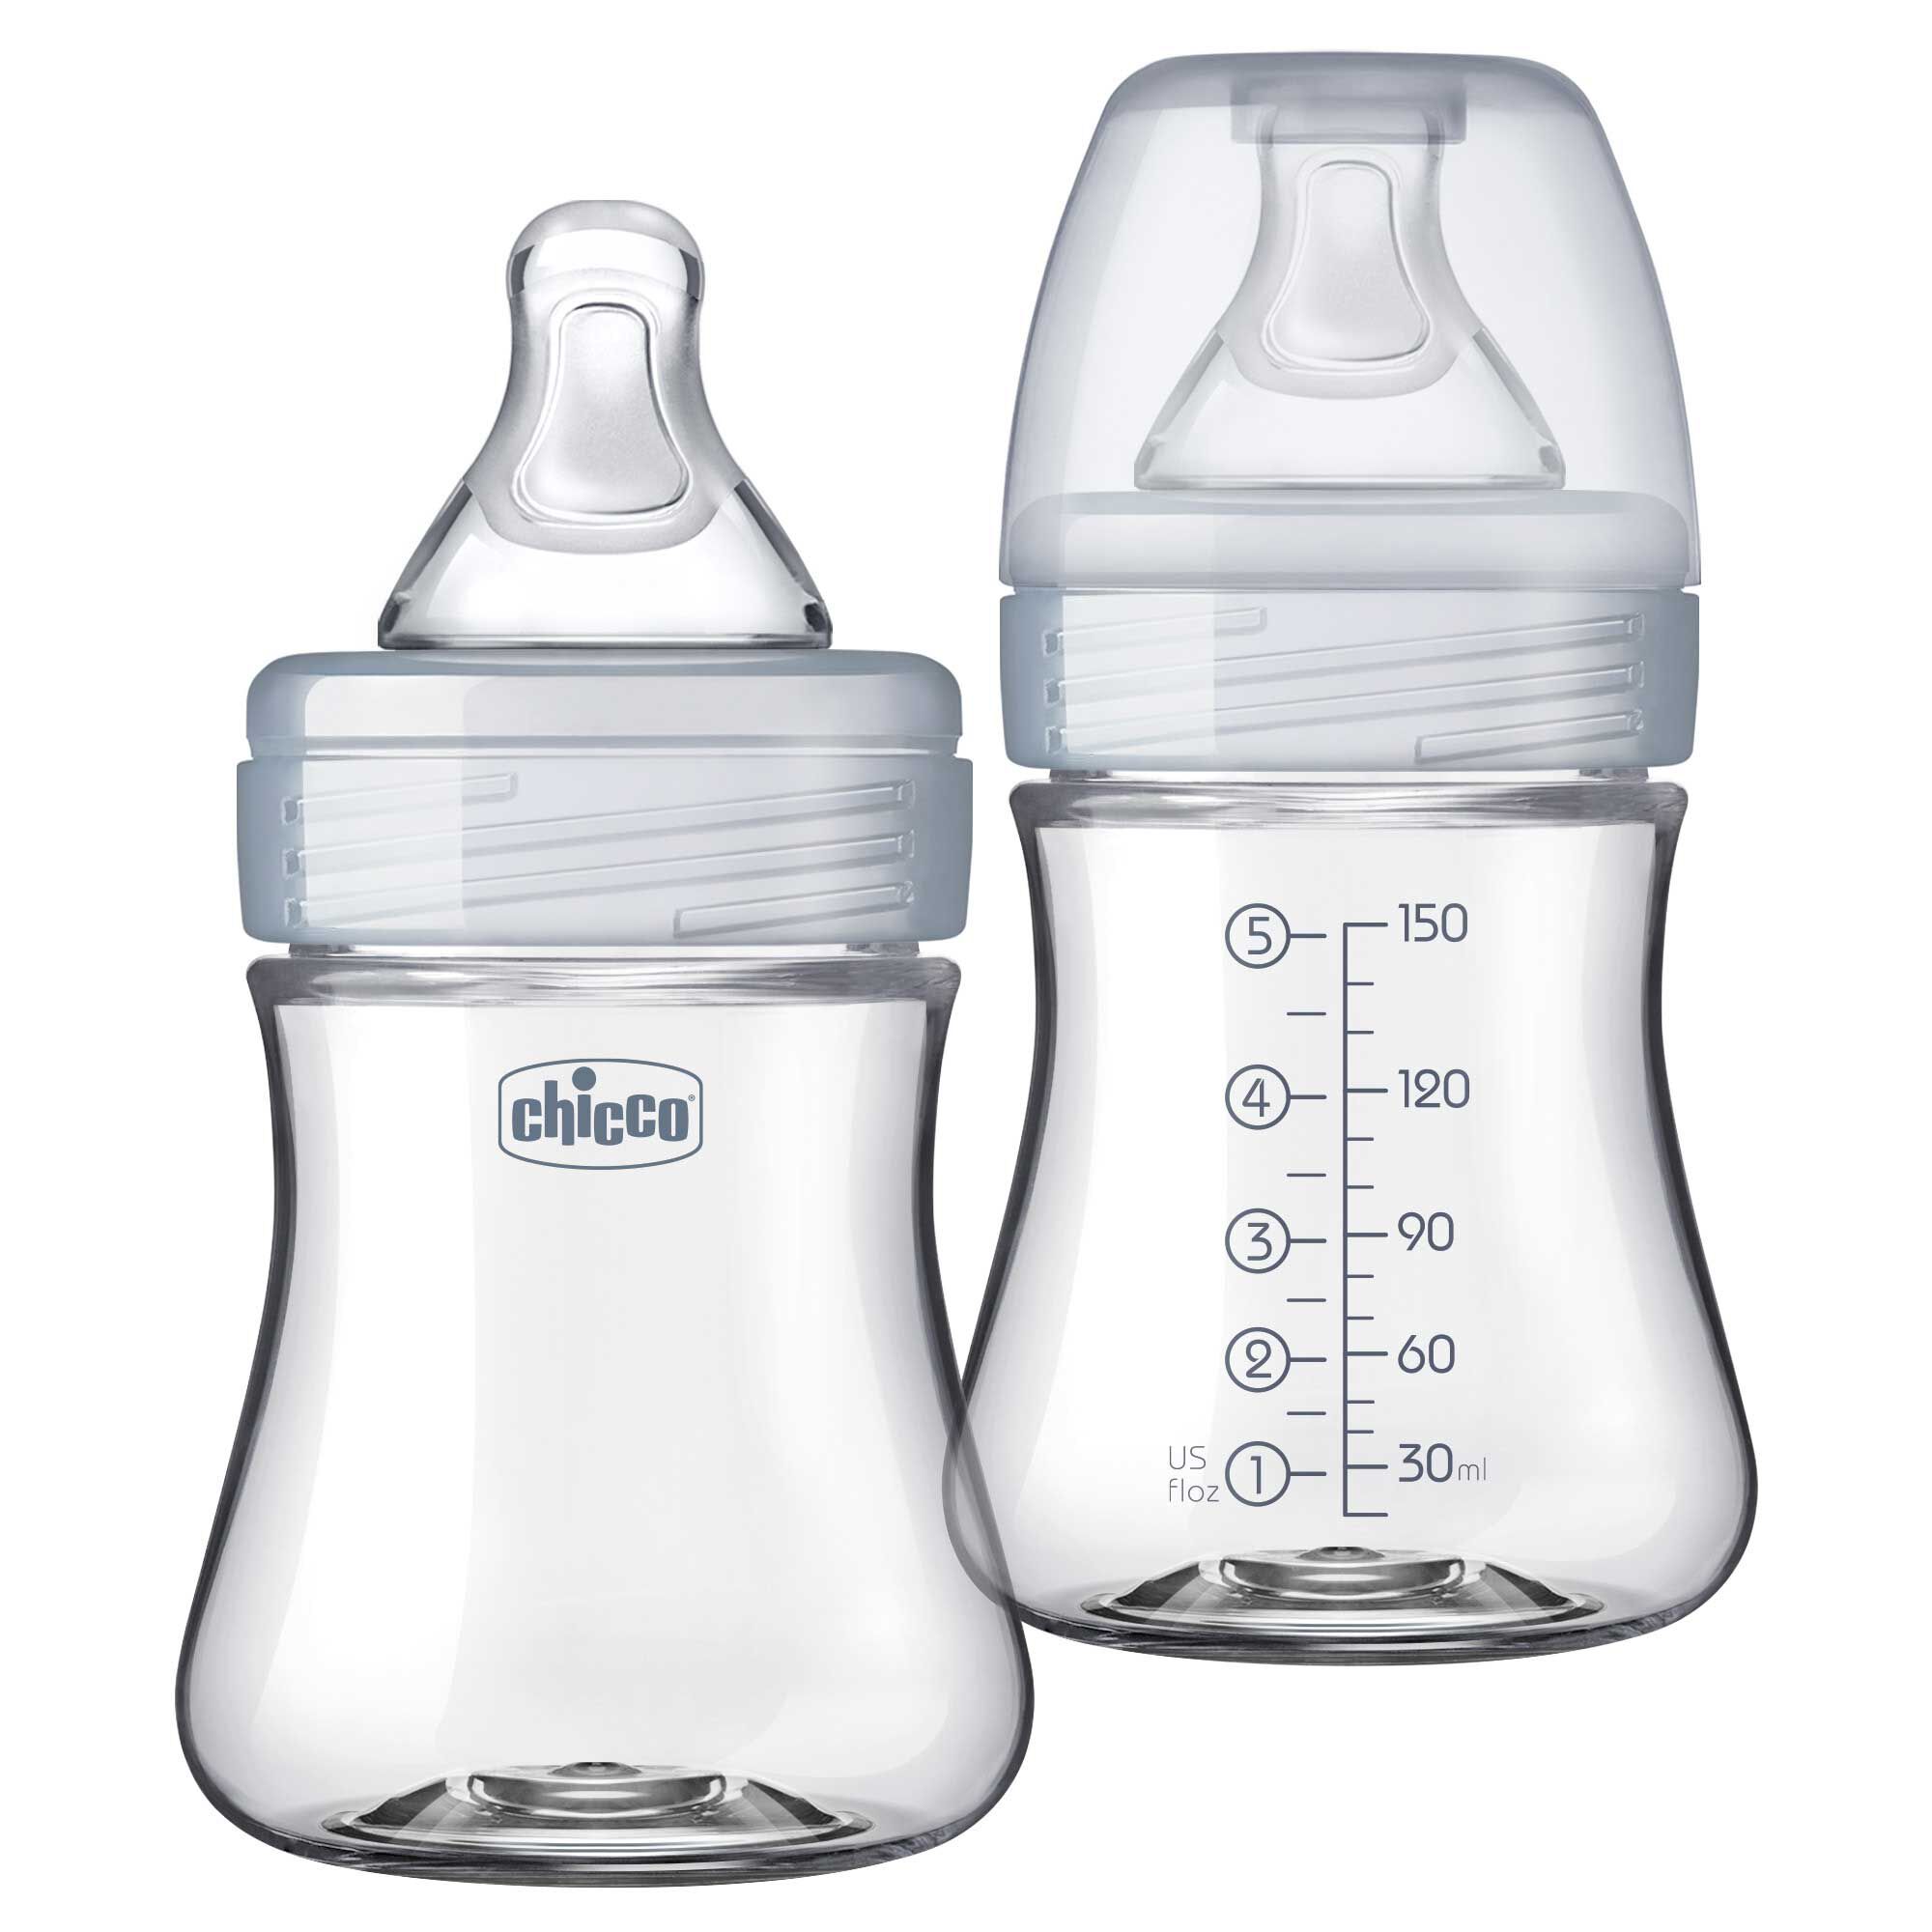 Medela Breast Milk Bottle Spare Parts - The Breastfeeding Center, LLC